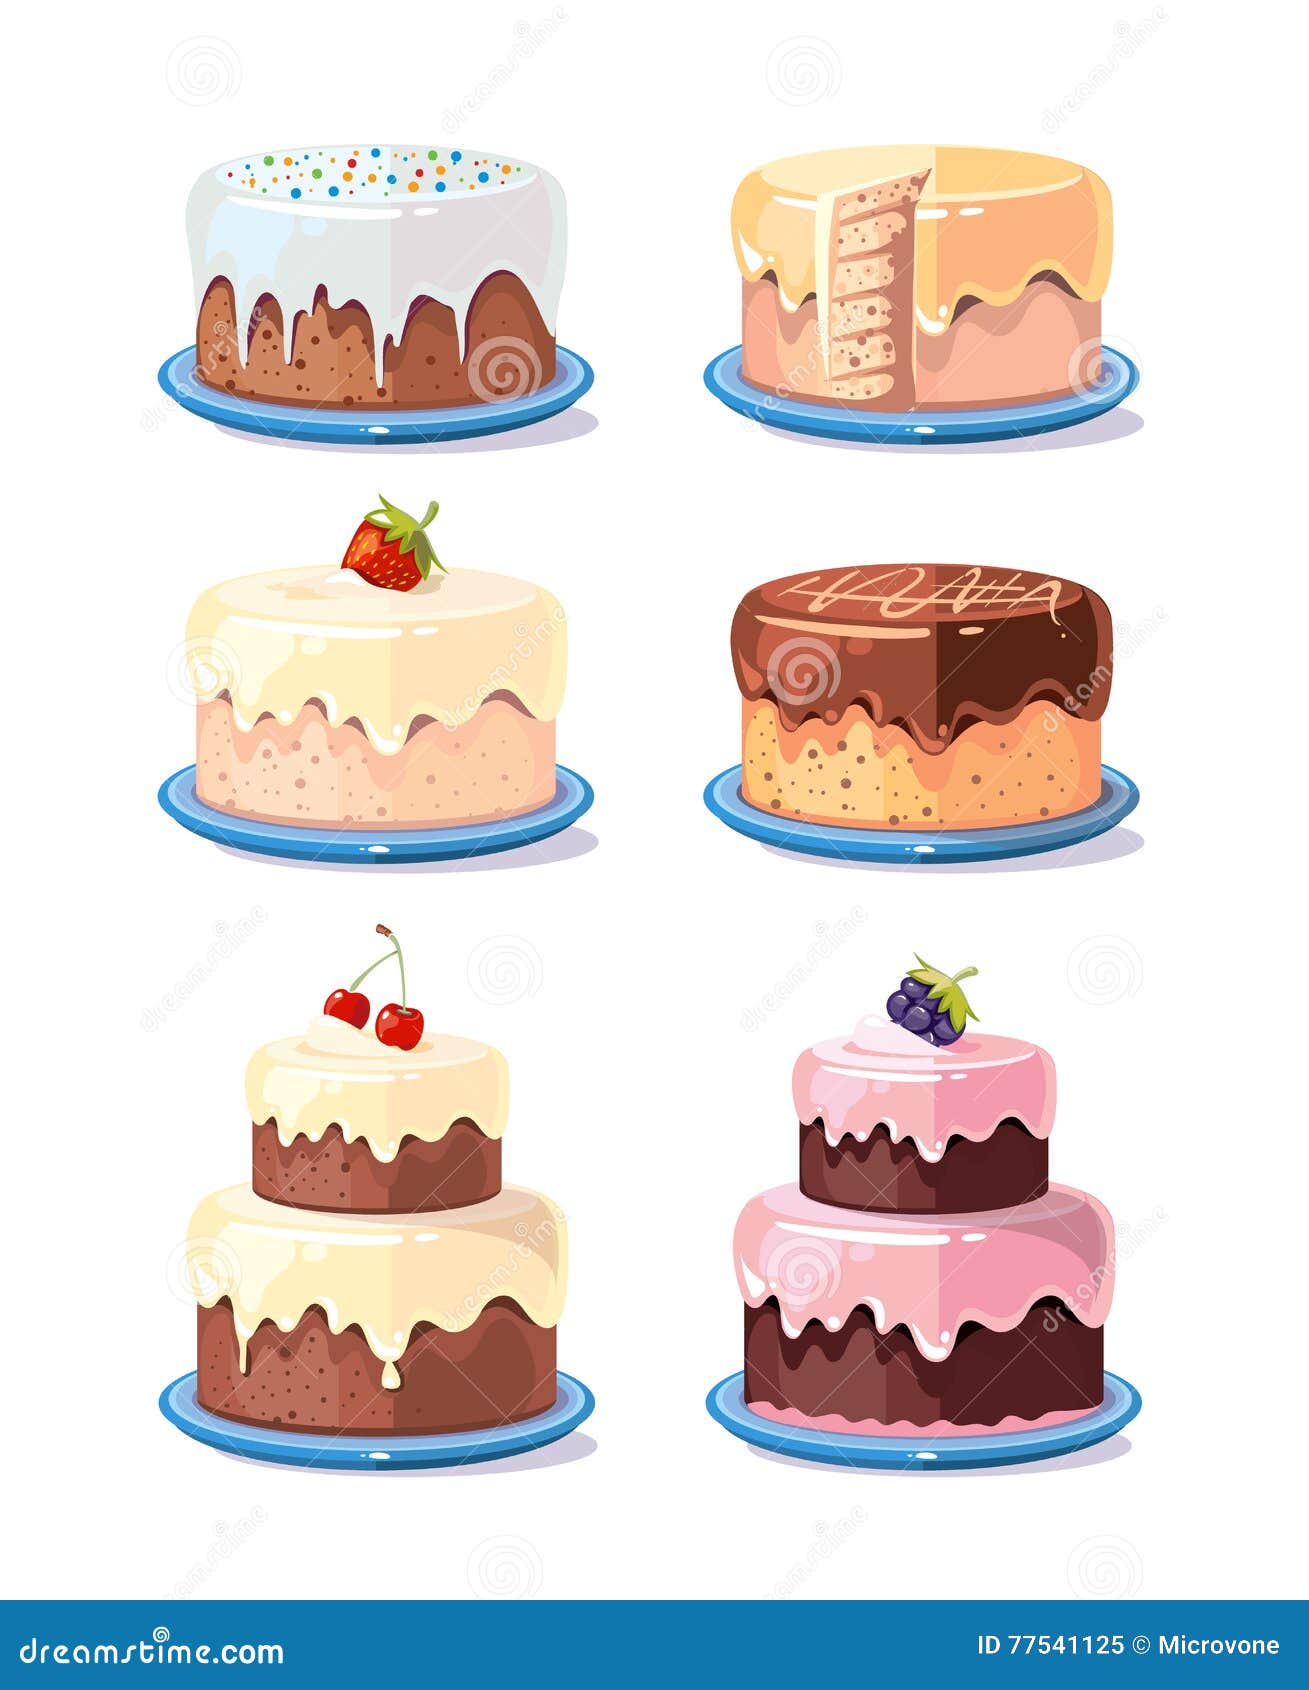 cream cake tasty cakes  set in cartoon style